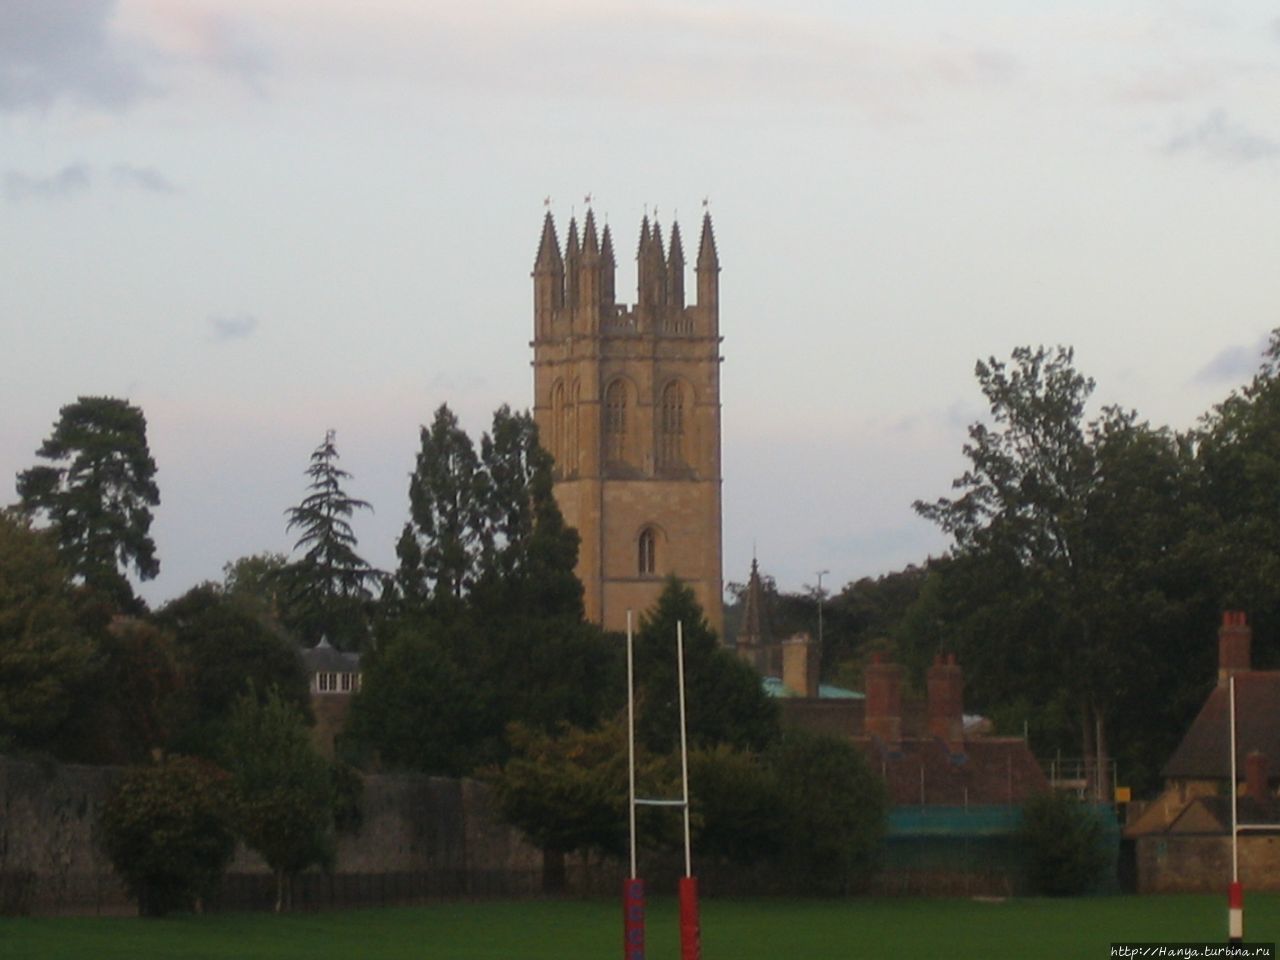 Магдален Колледж, Оксфорд. Бащня -символ Оксфорда